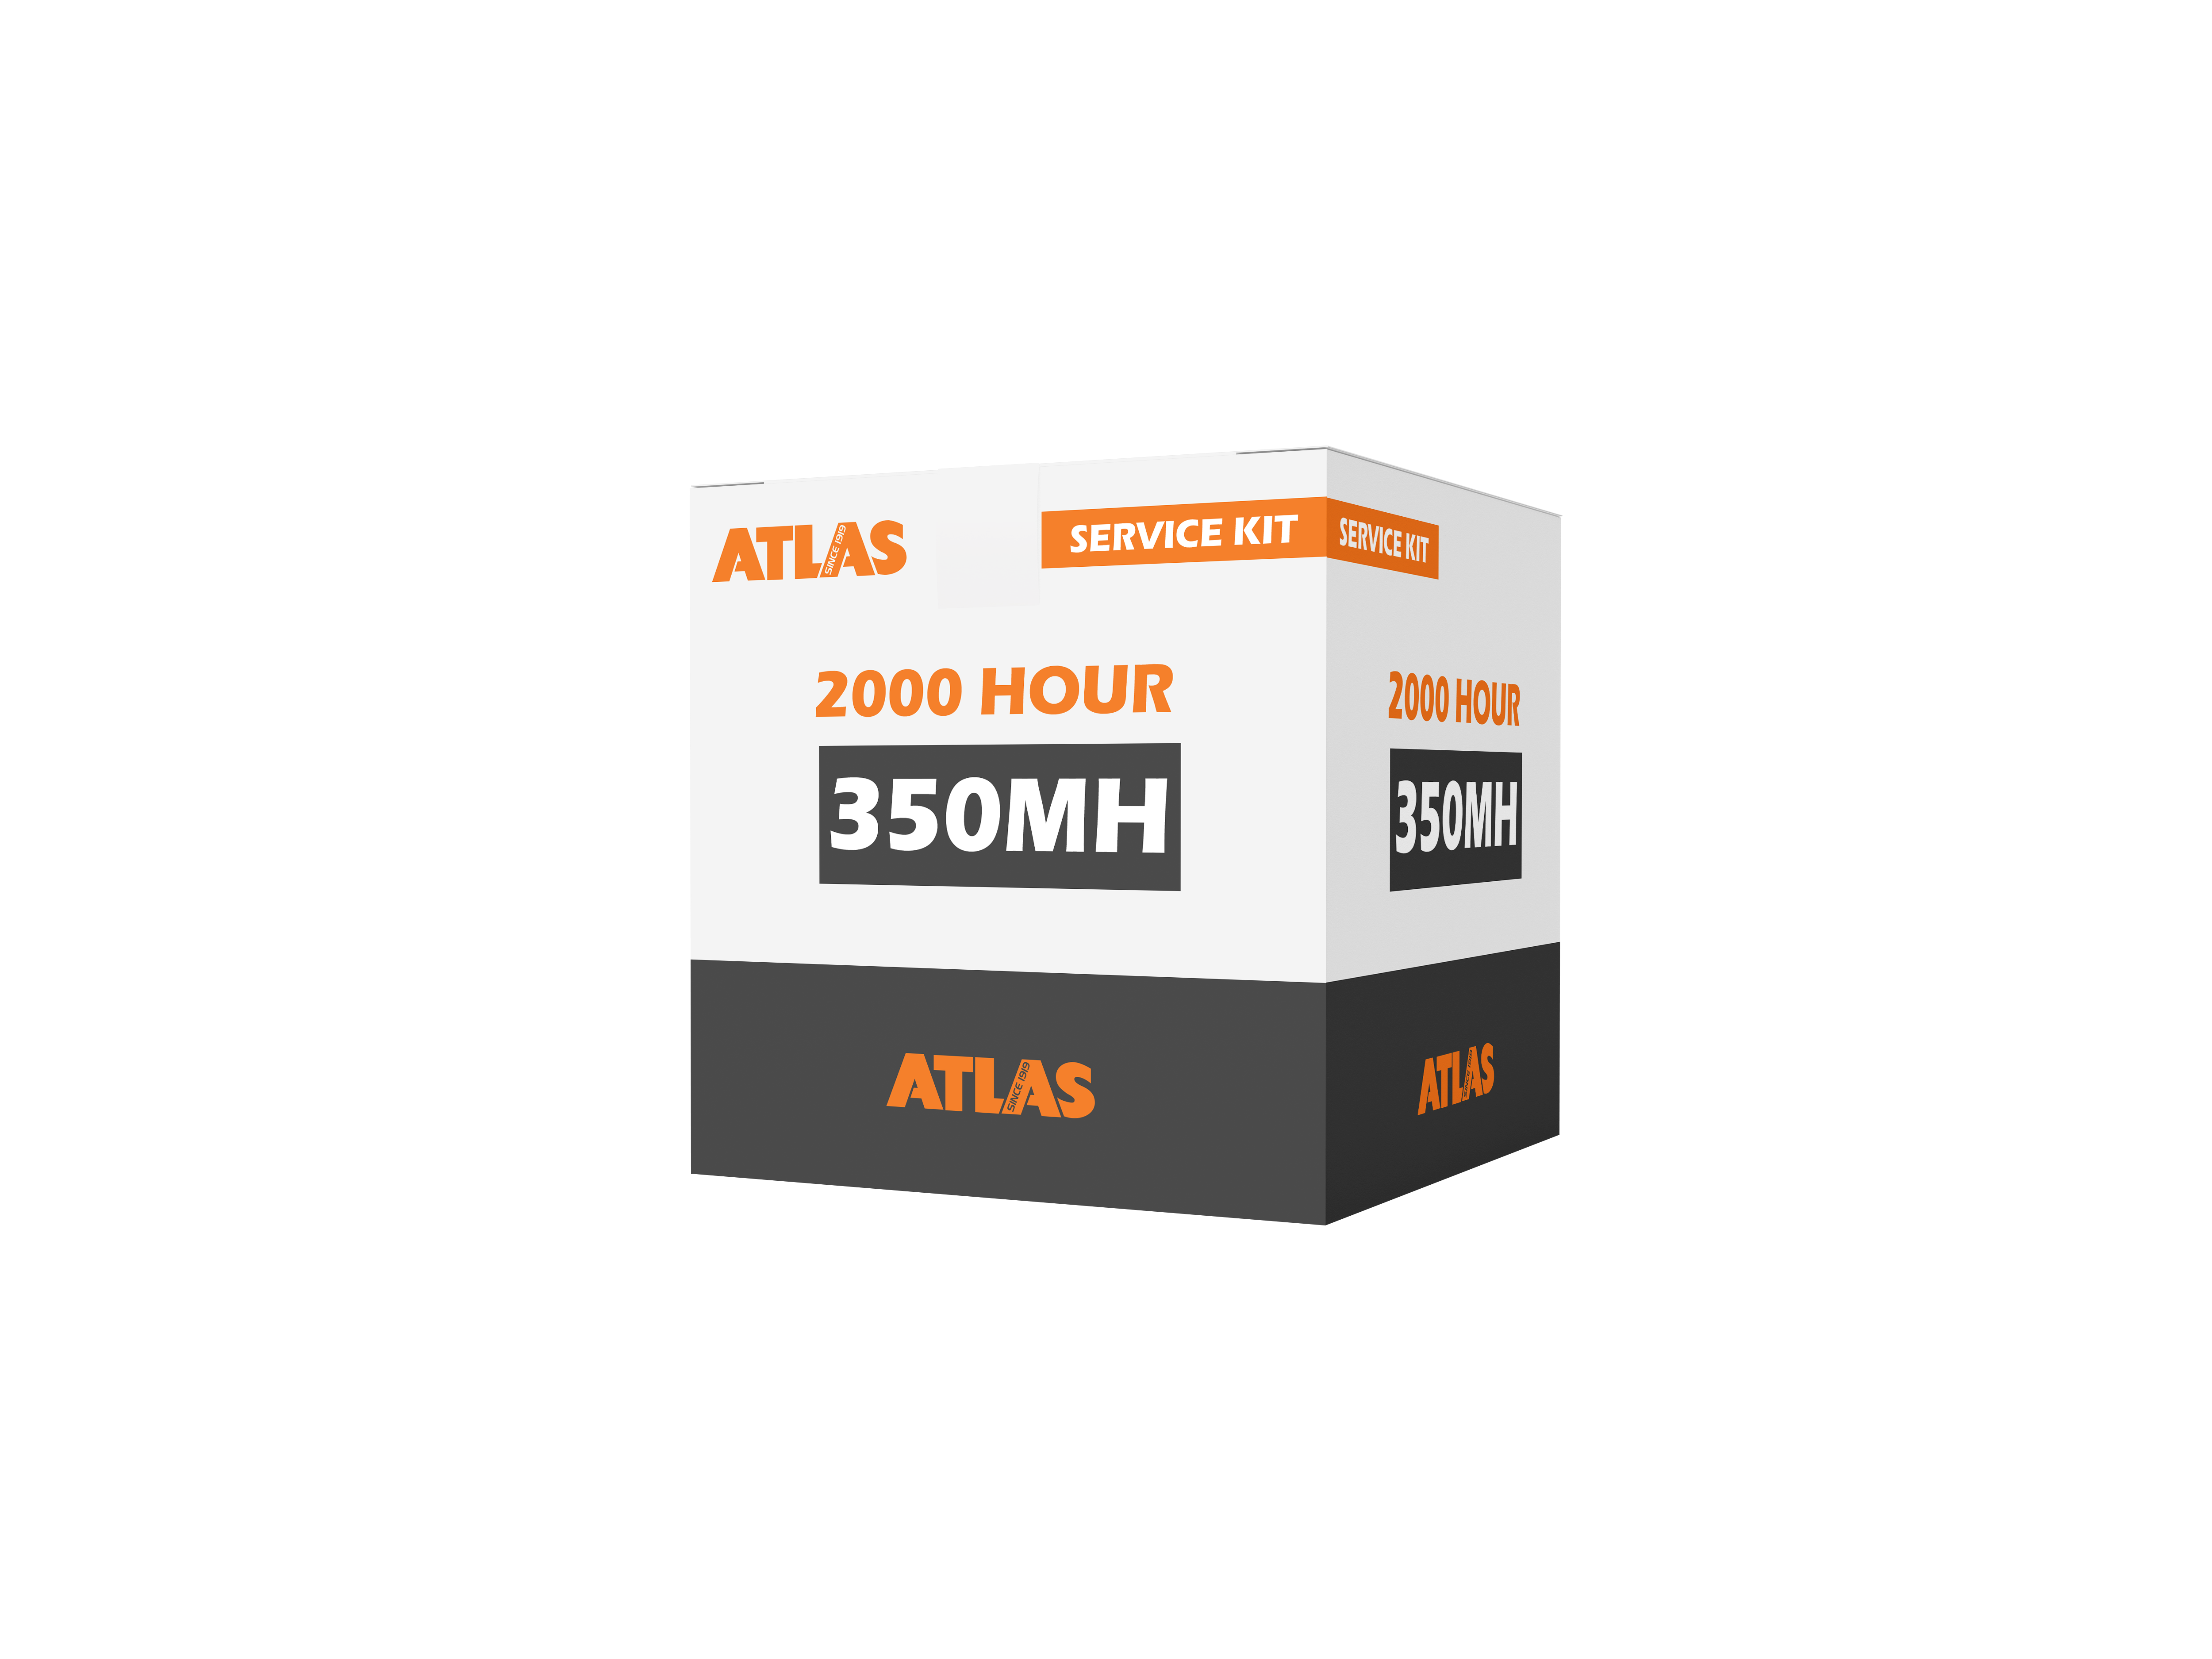 Atlas 350MH 2000 Hour Service Kit (352 series)